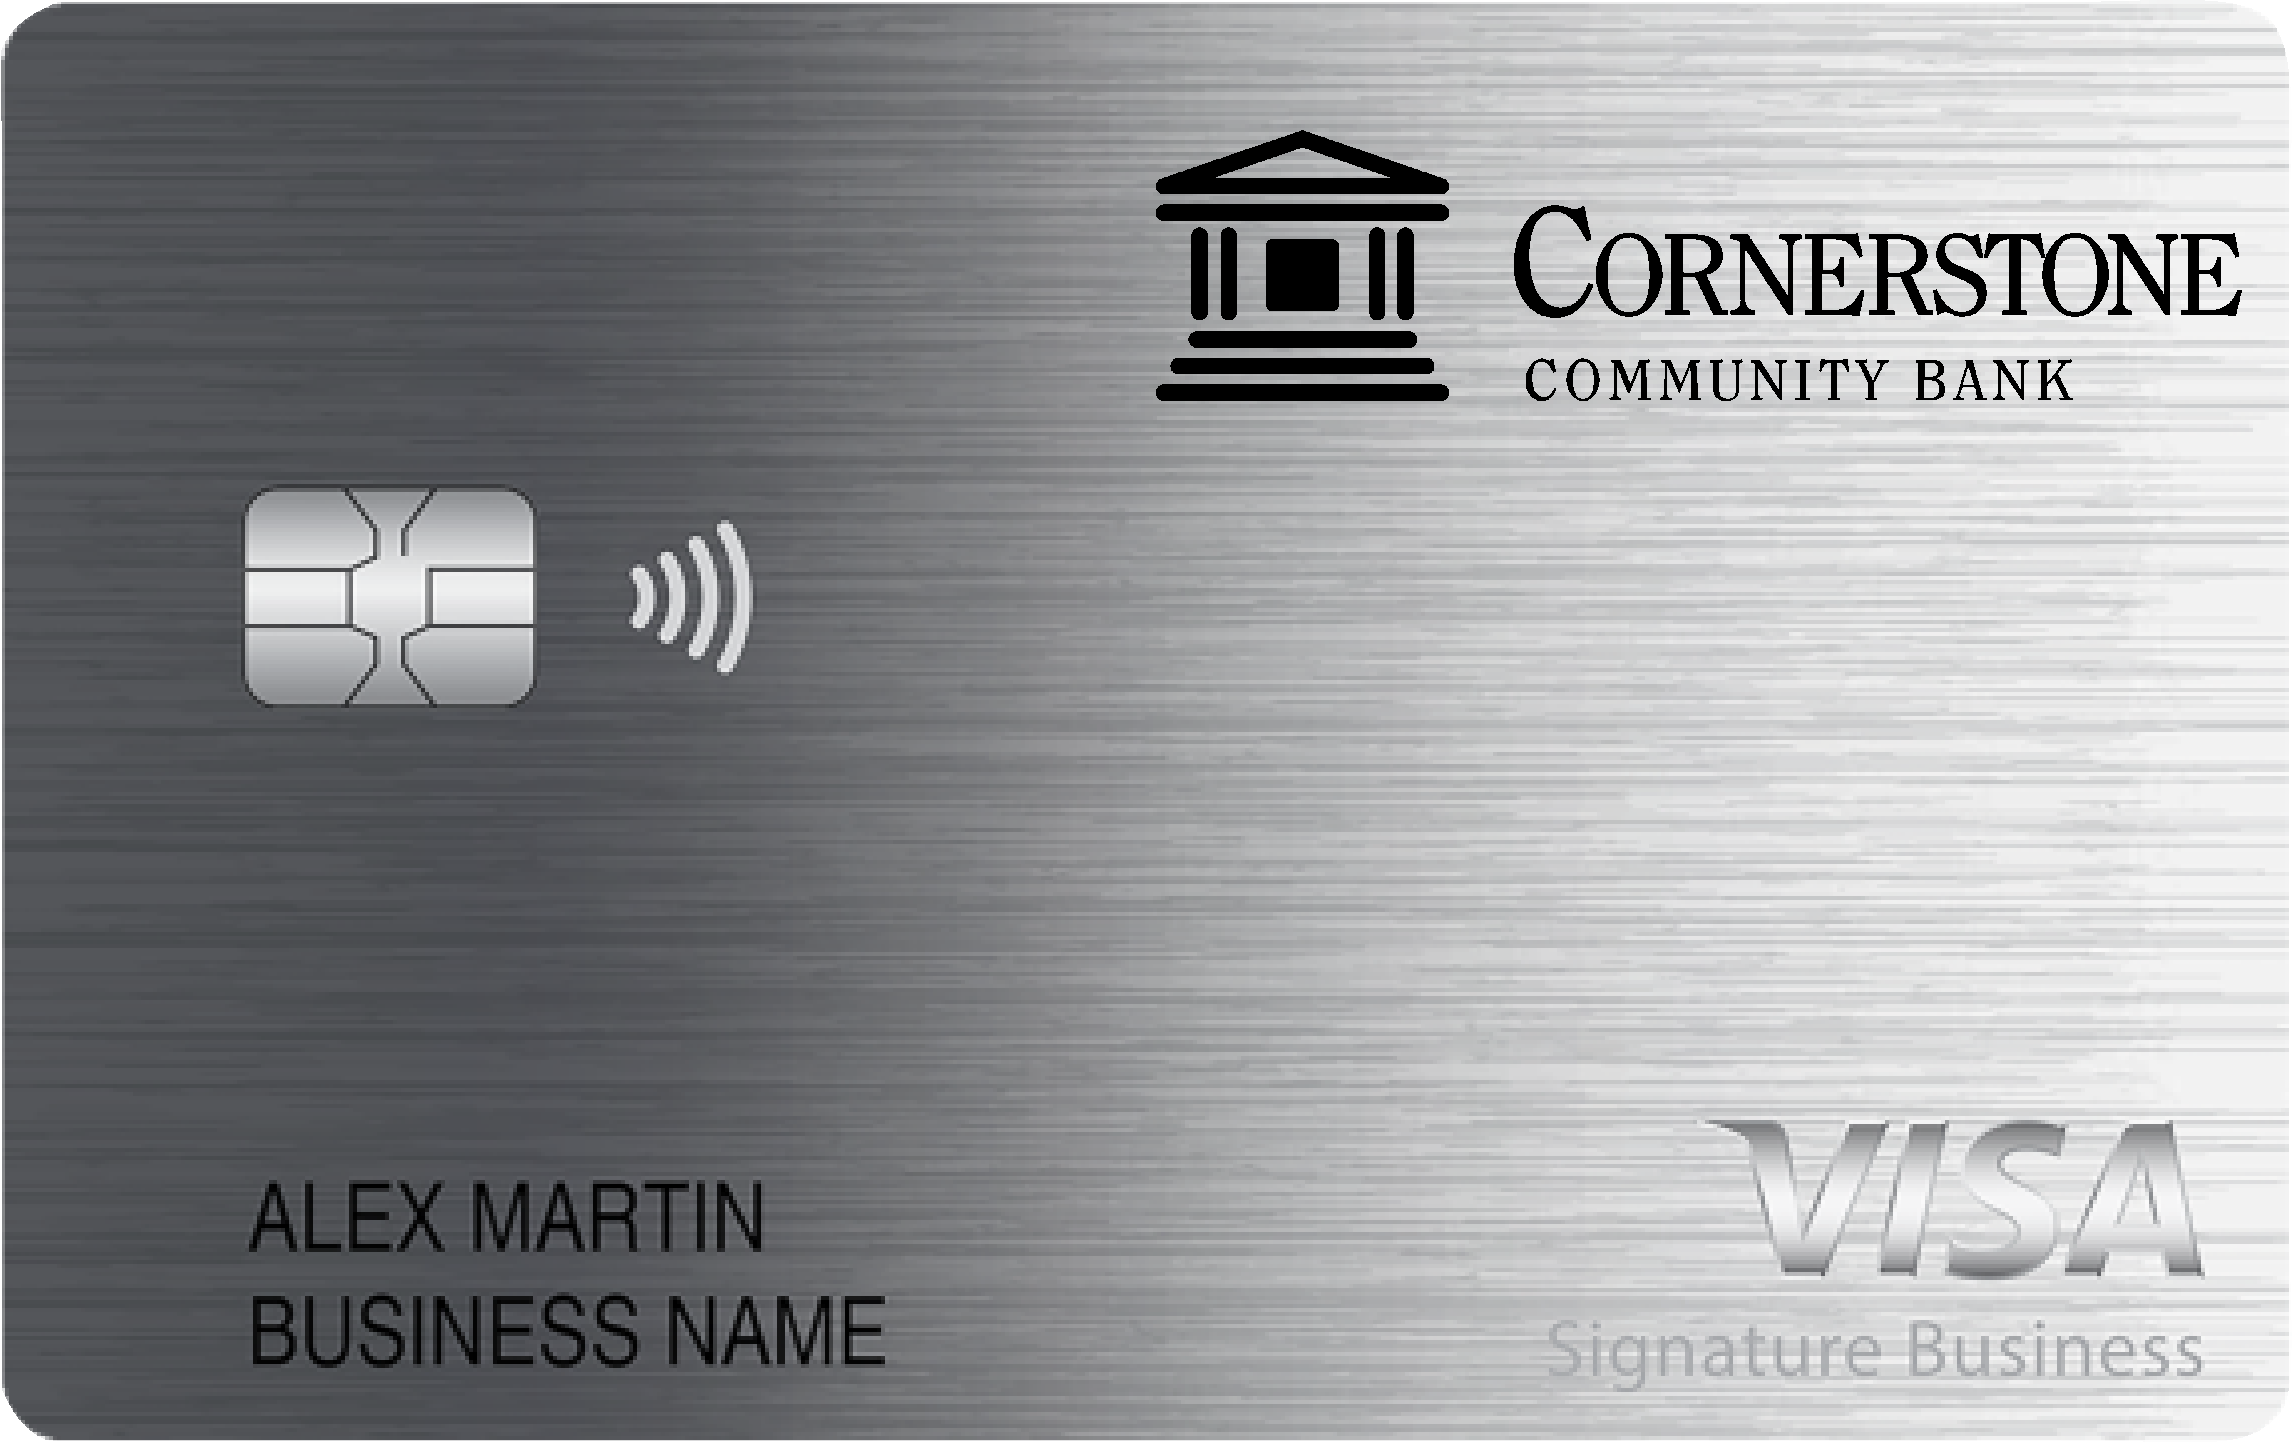 Cornerstone Community Bank Smart Business Rewards Card